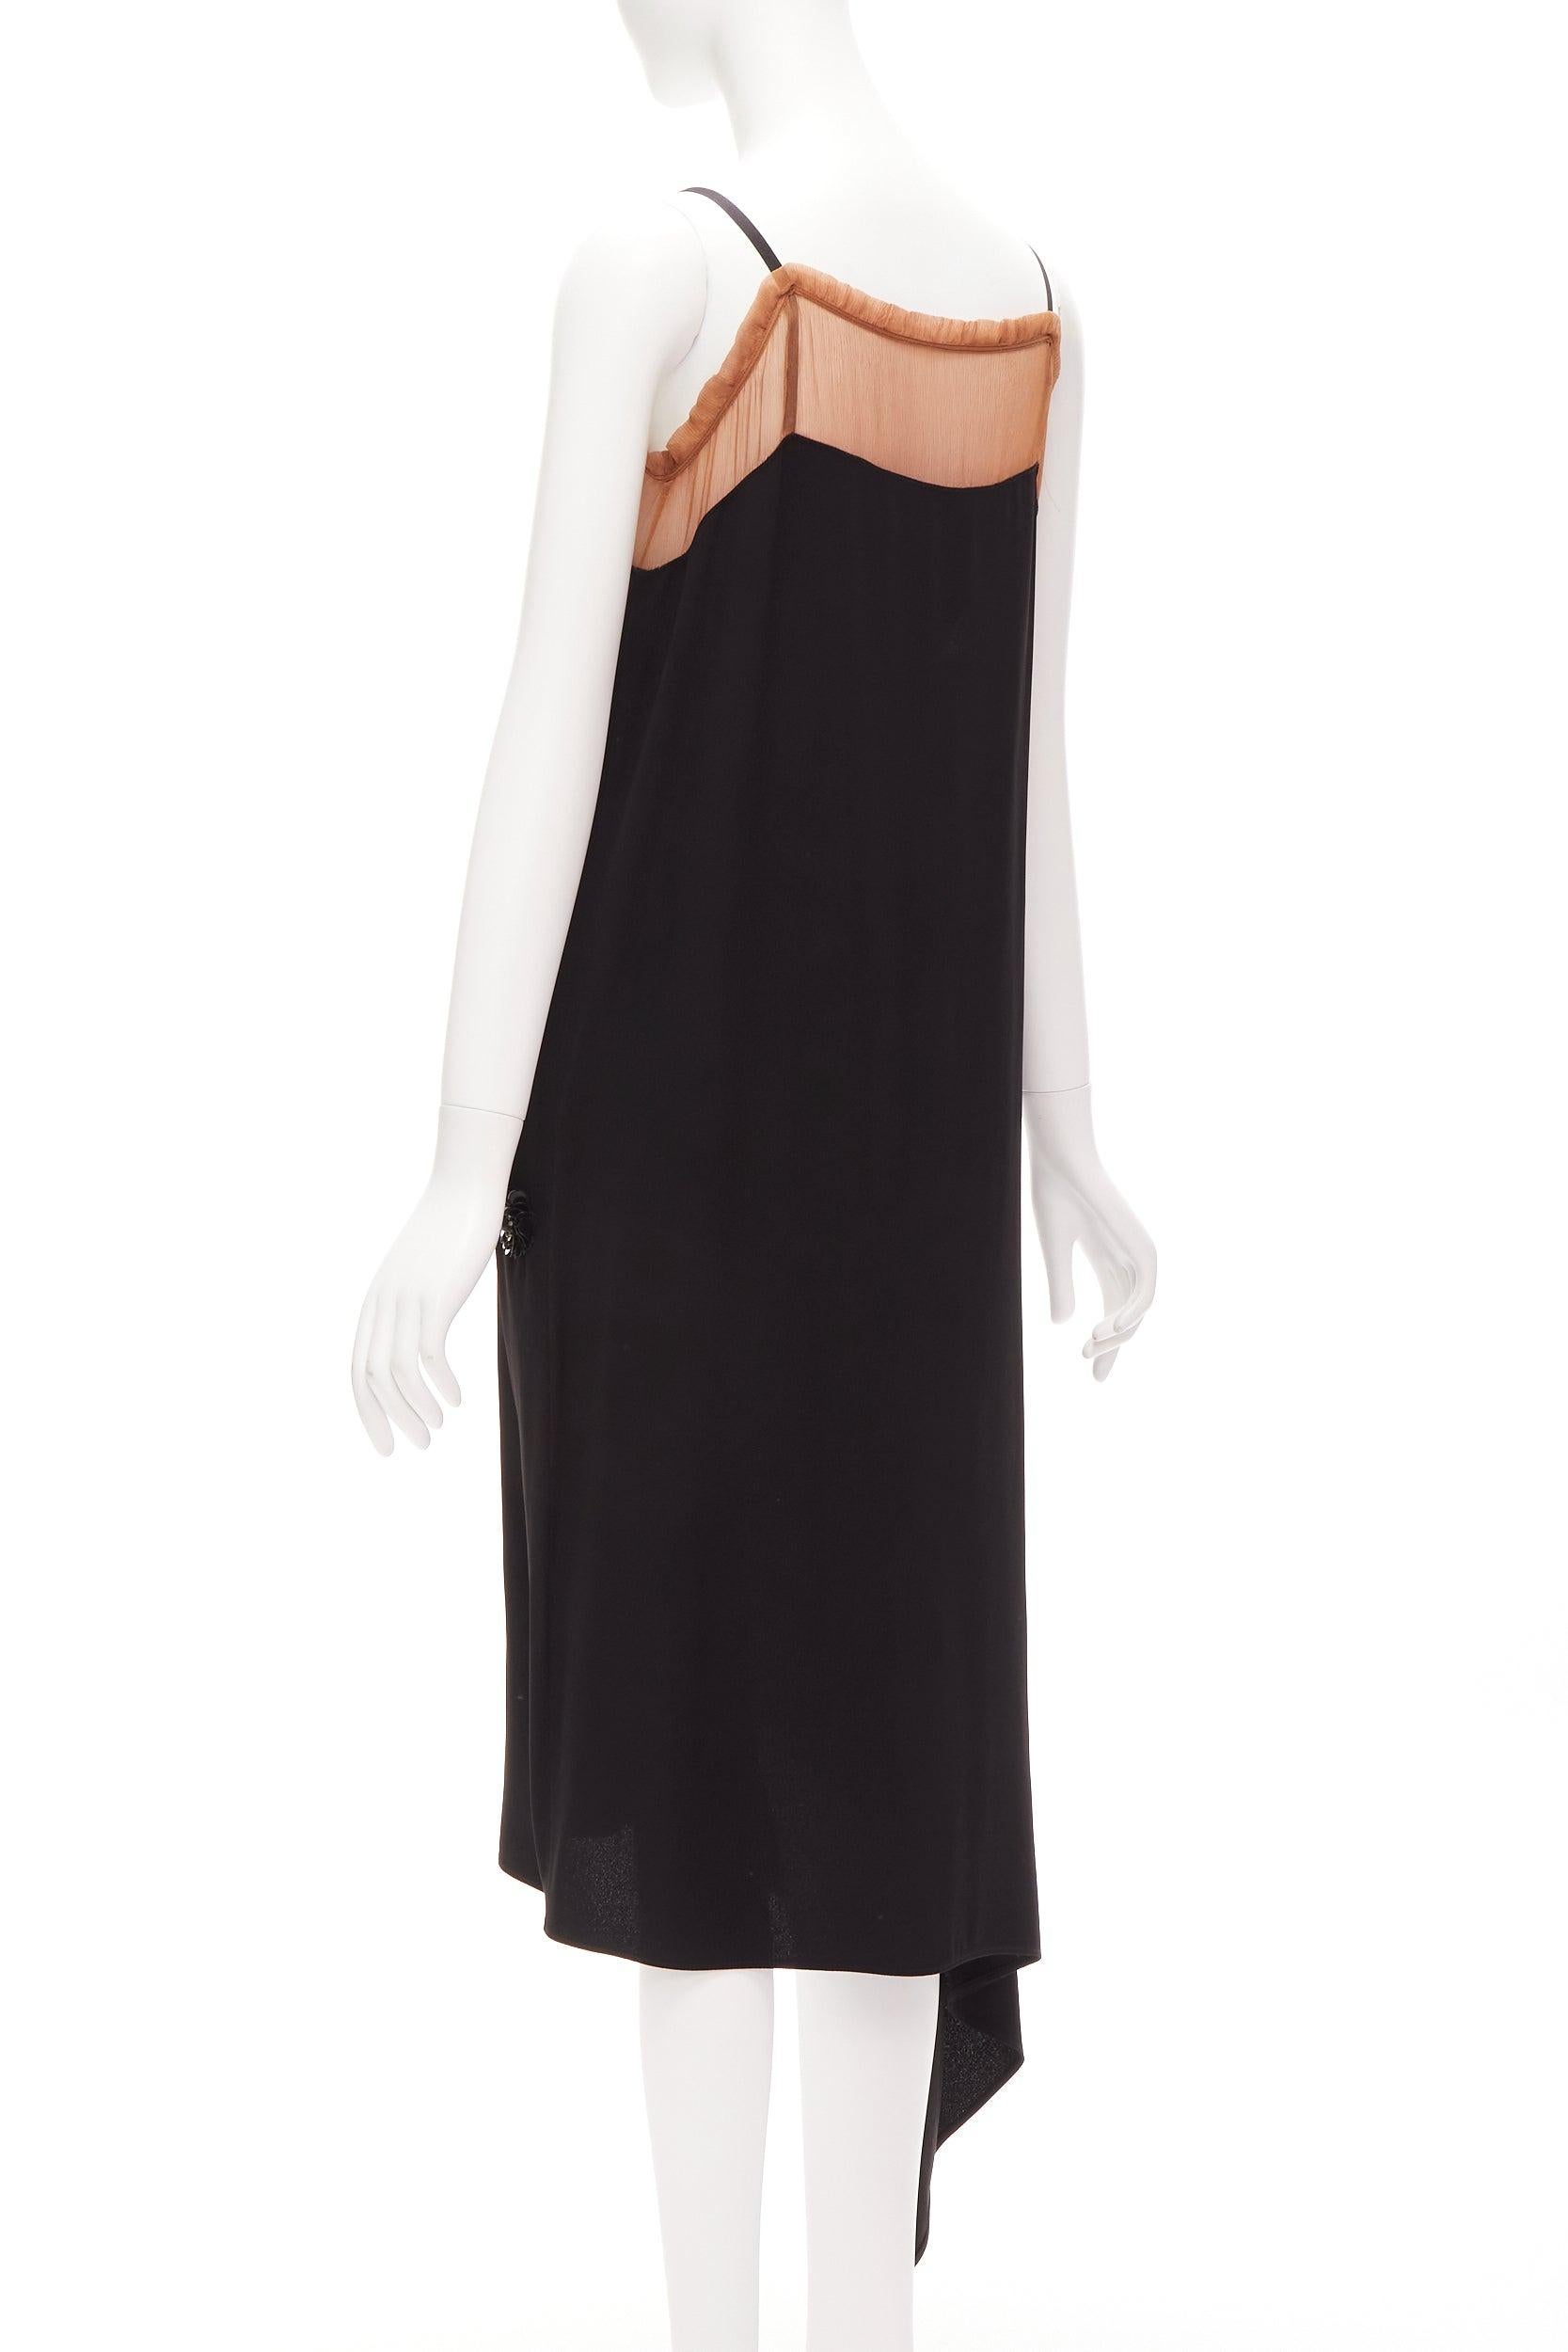 MARNI black floral sequins embellishment nude ruffle slip dress IT38 XS For Sale 2